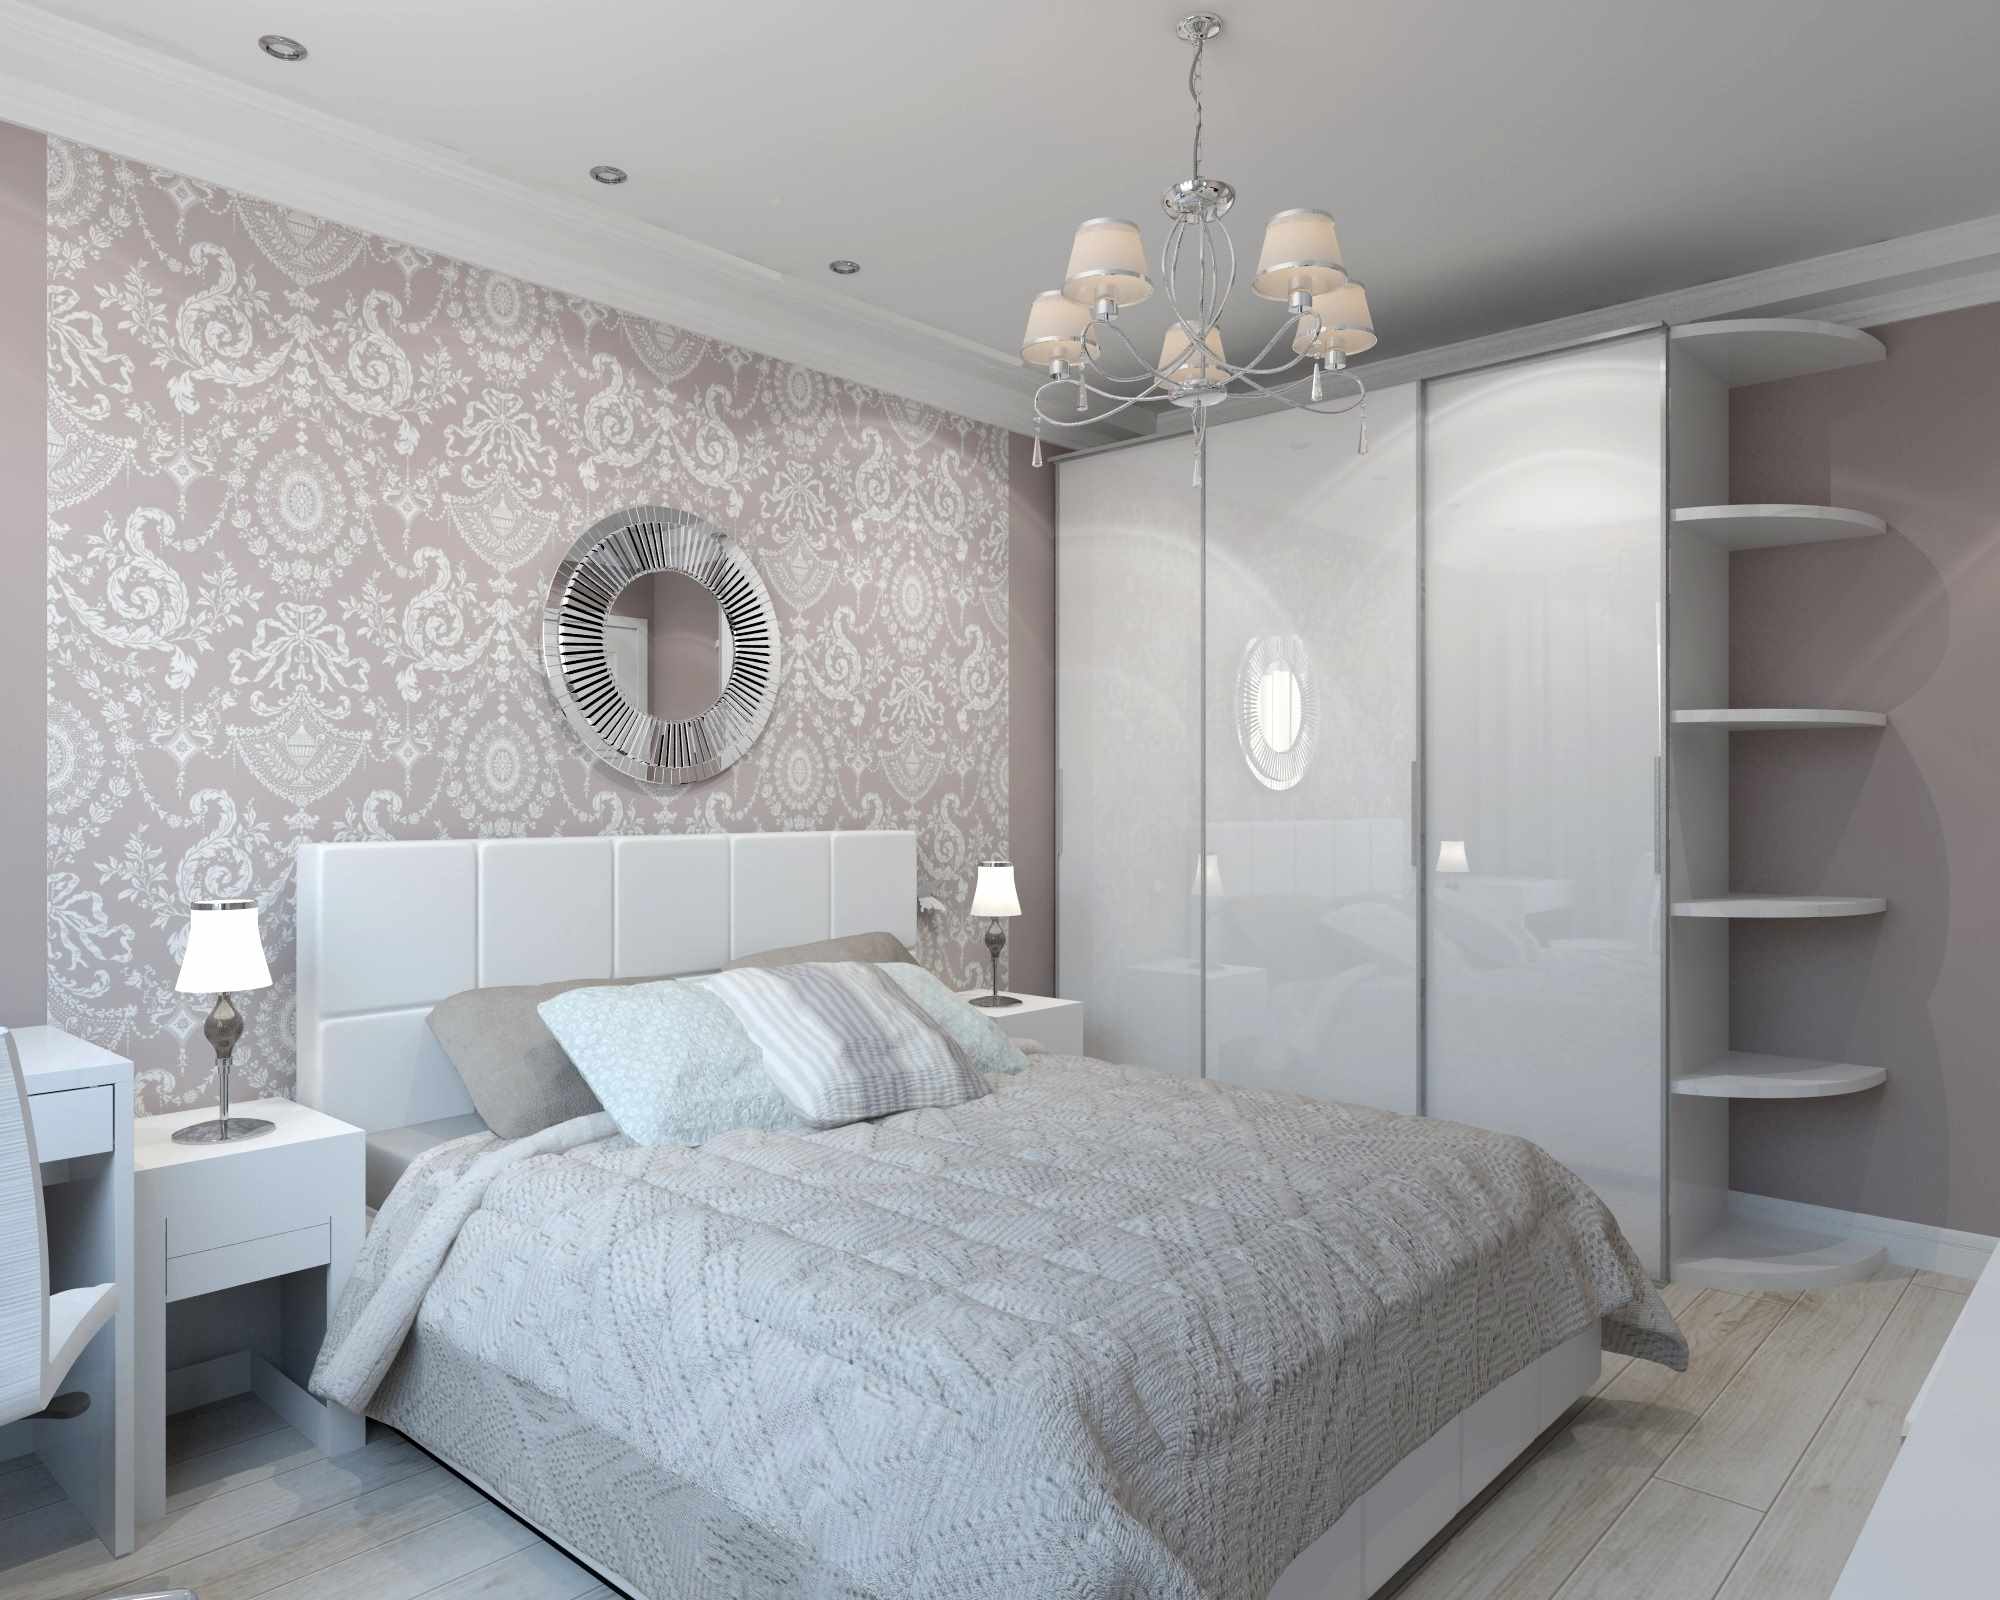 variant of an unusual bedroom interior design